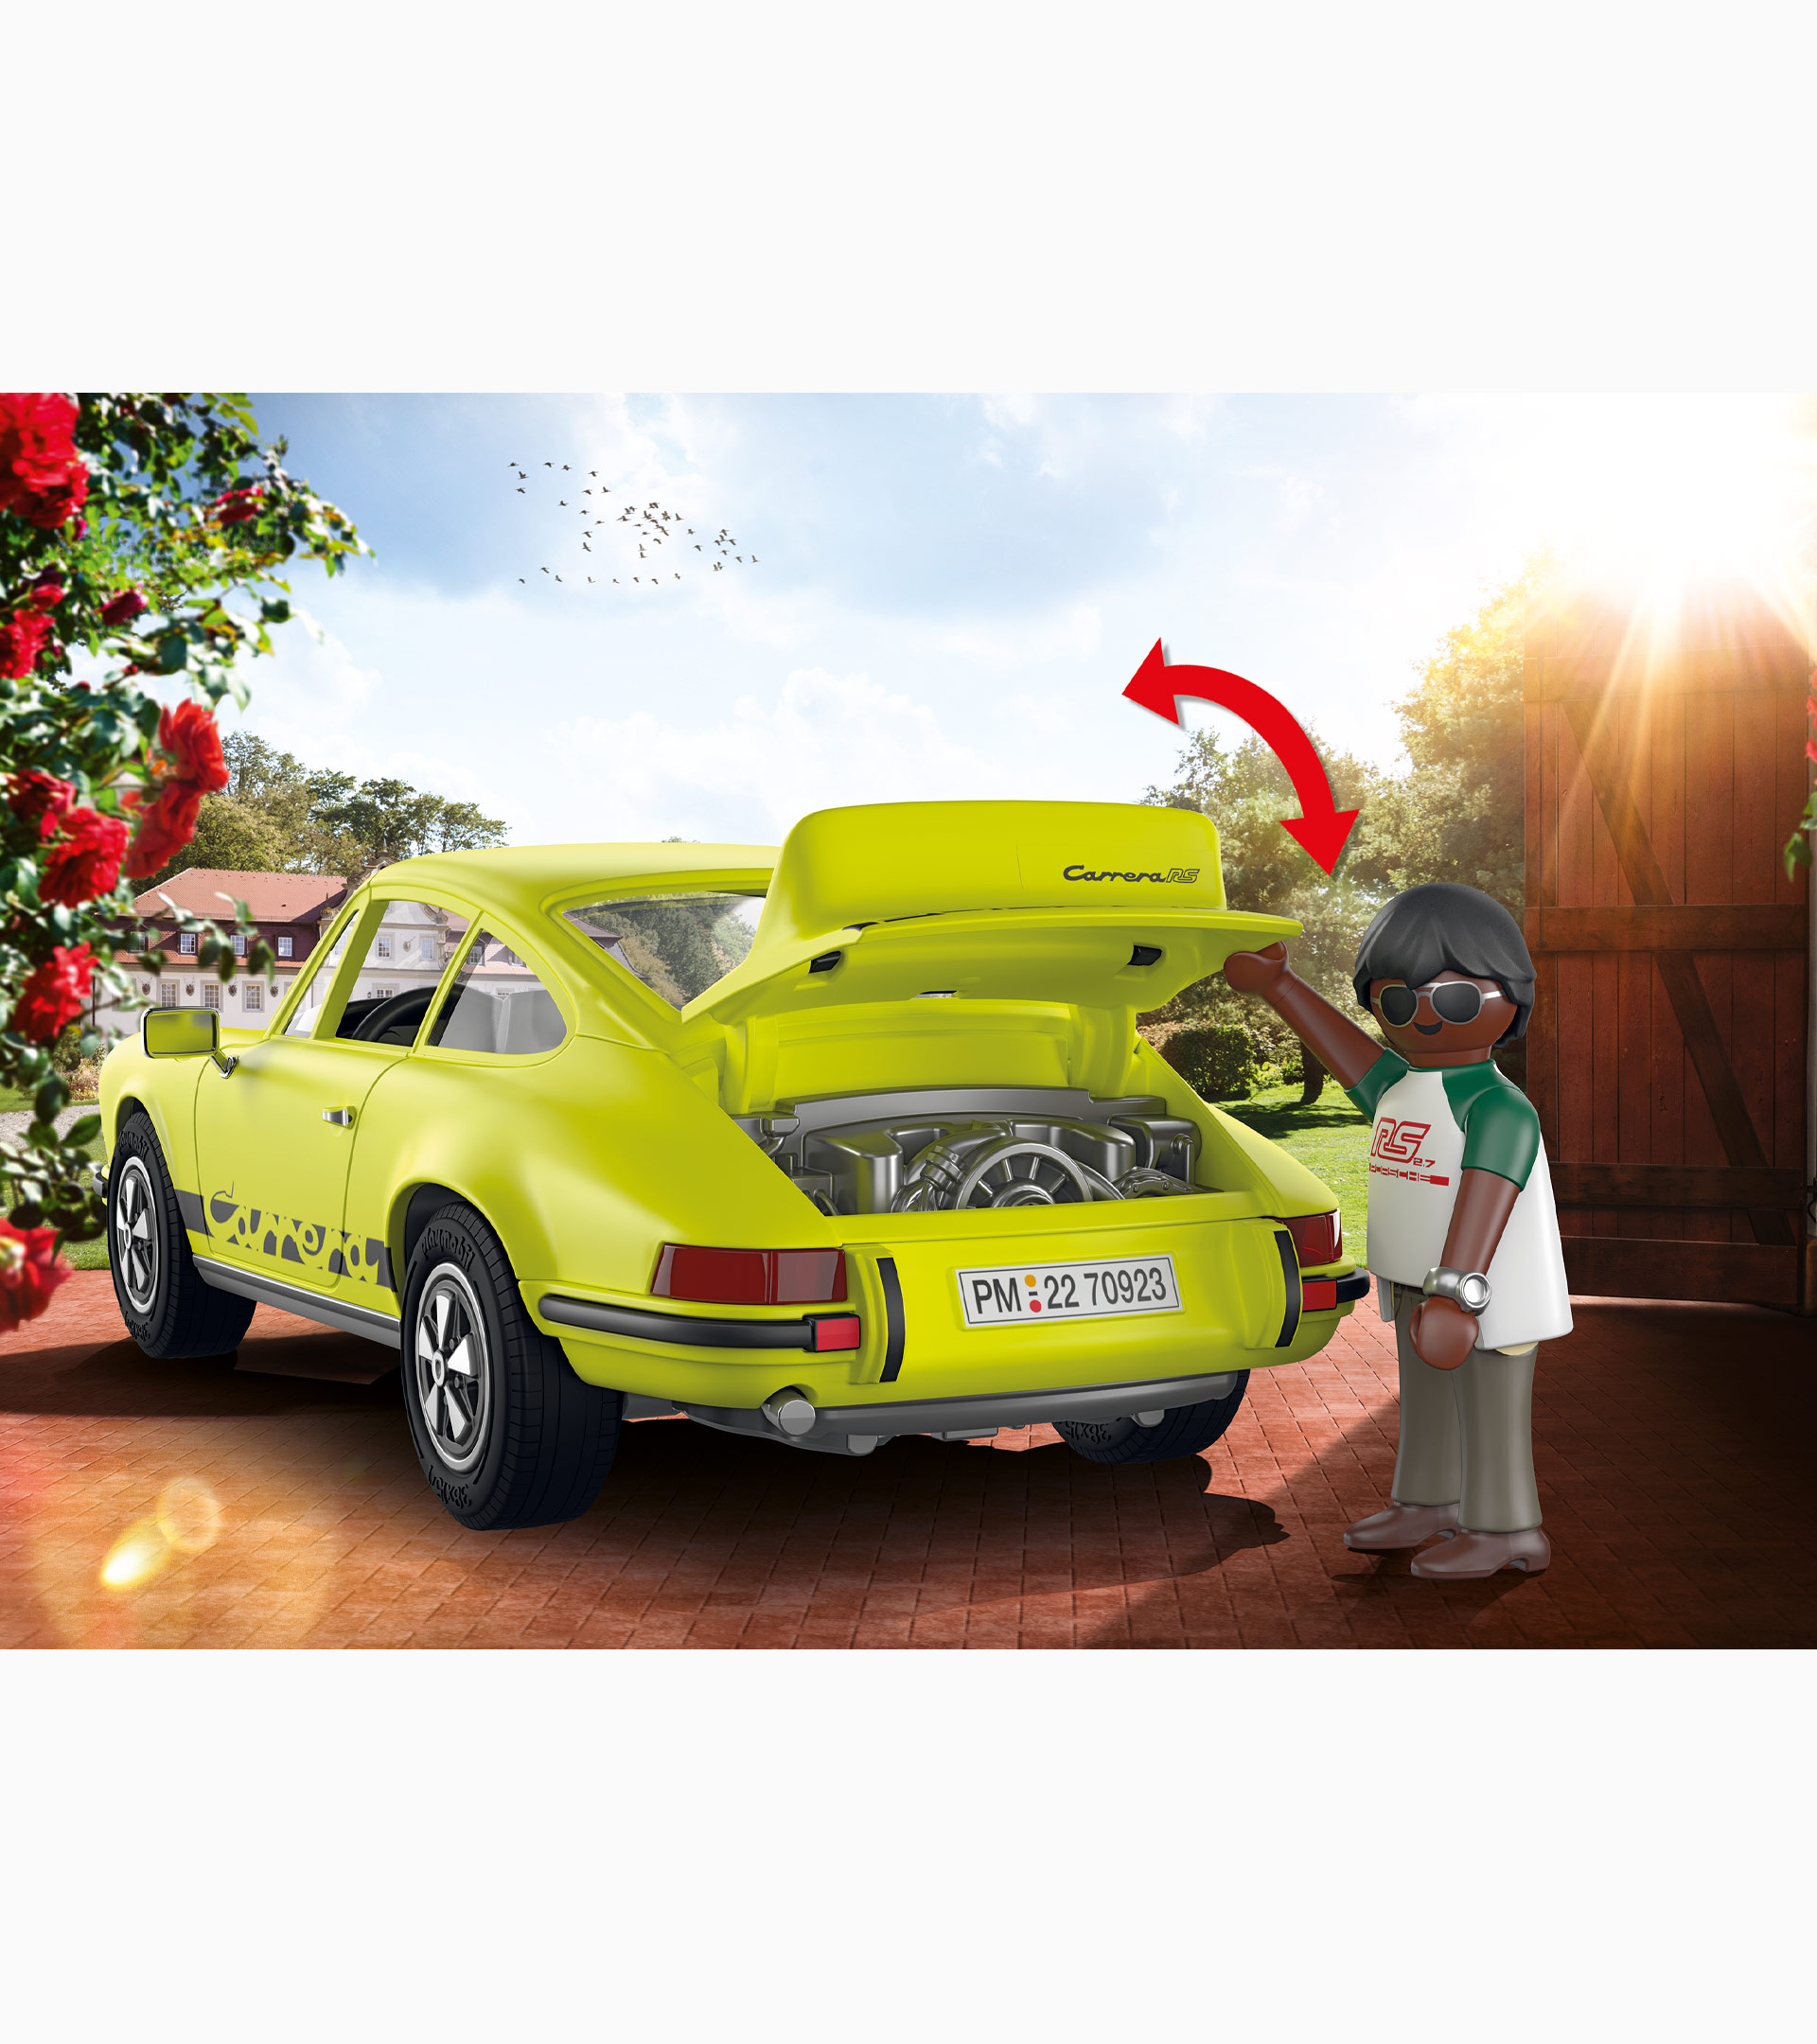 PLAYMOBIL Porsche 911 Carrera S, the sporty Christmas gift, Car News